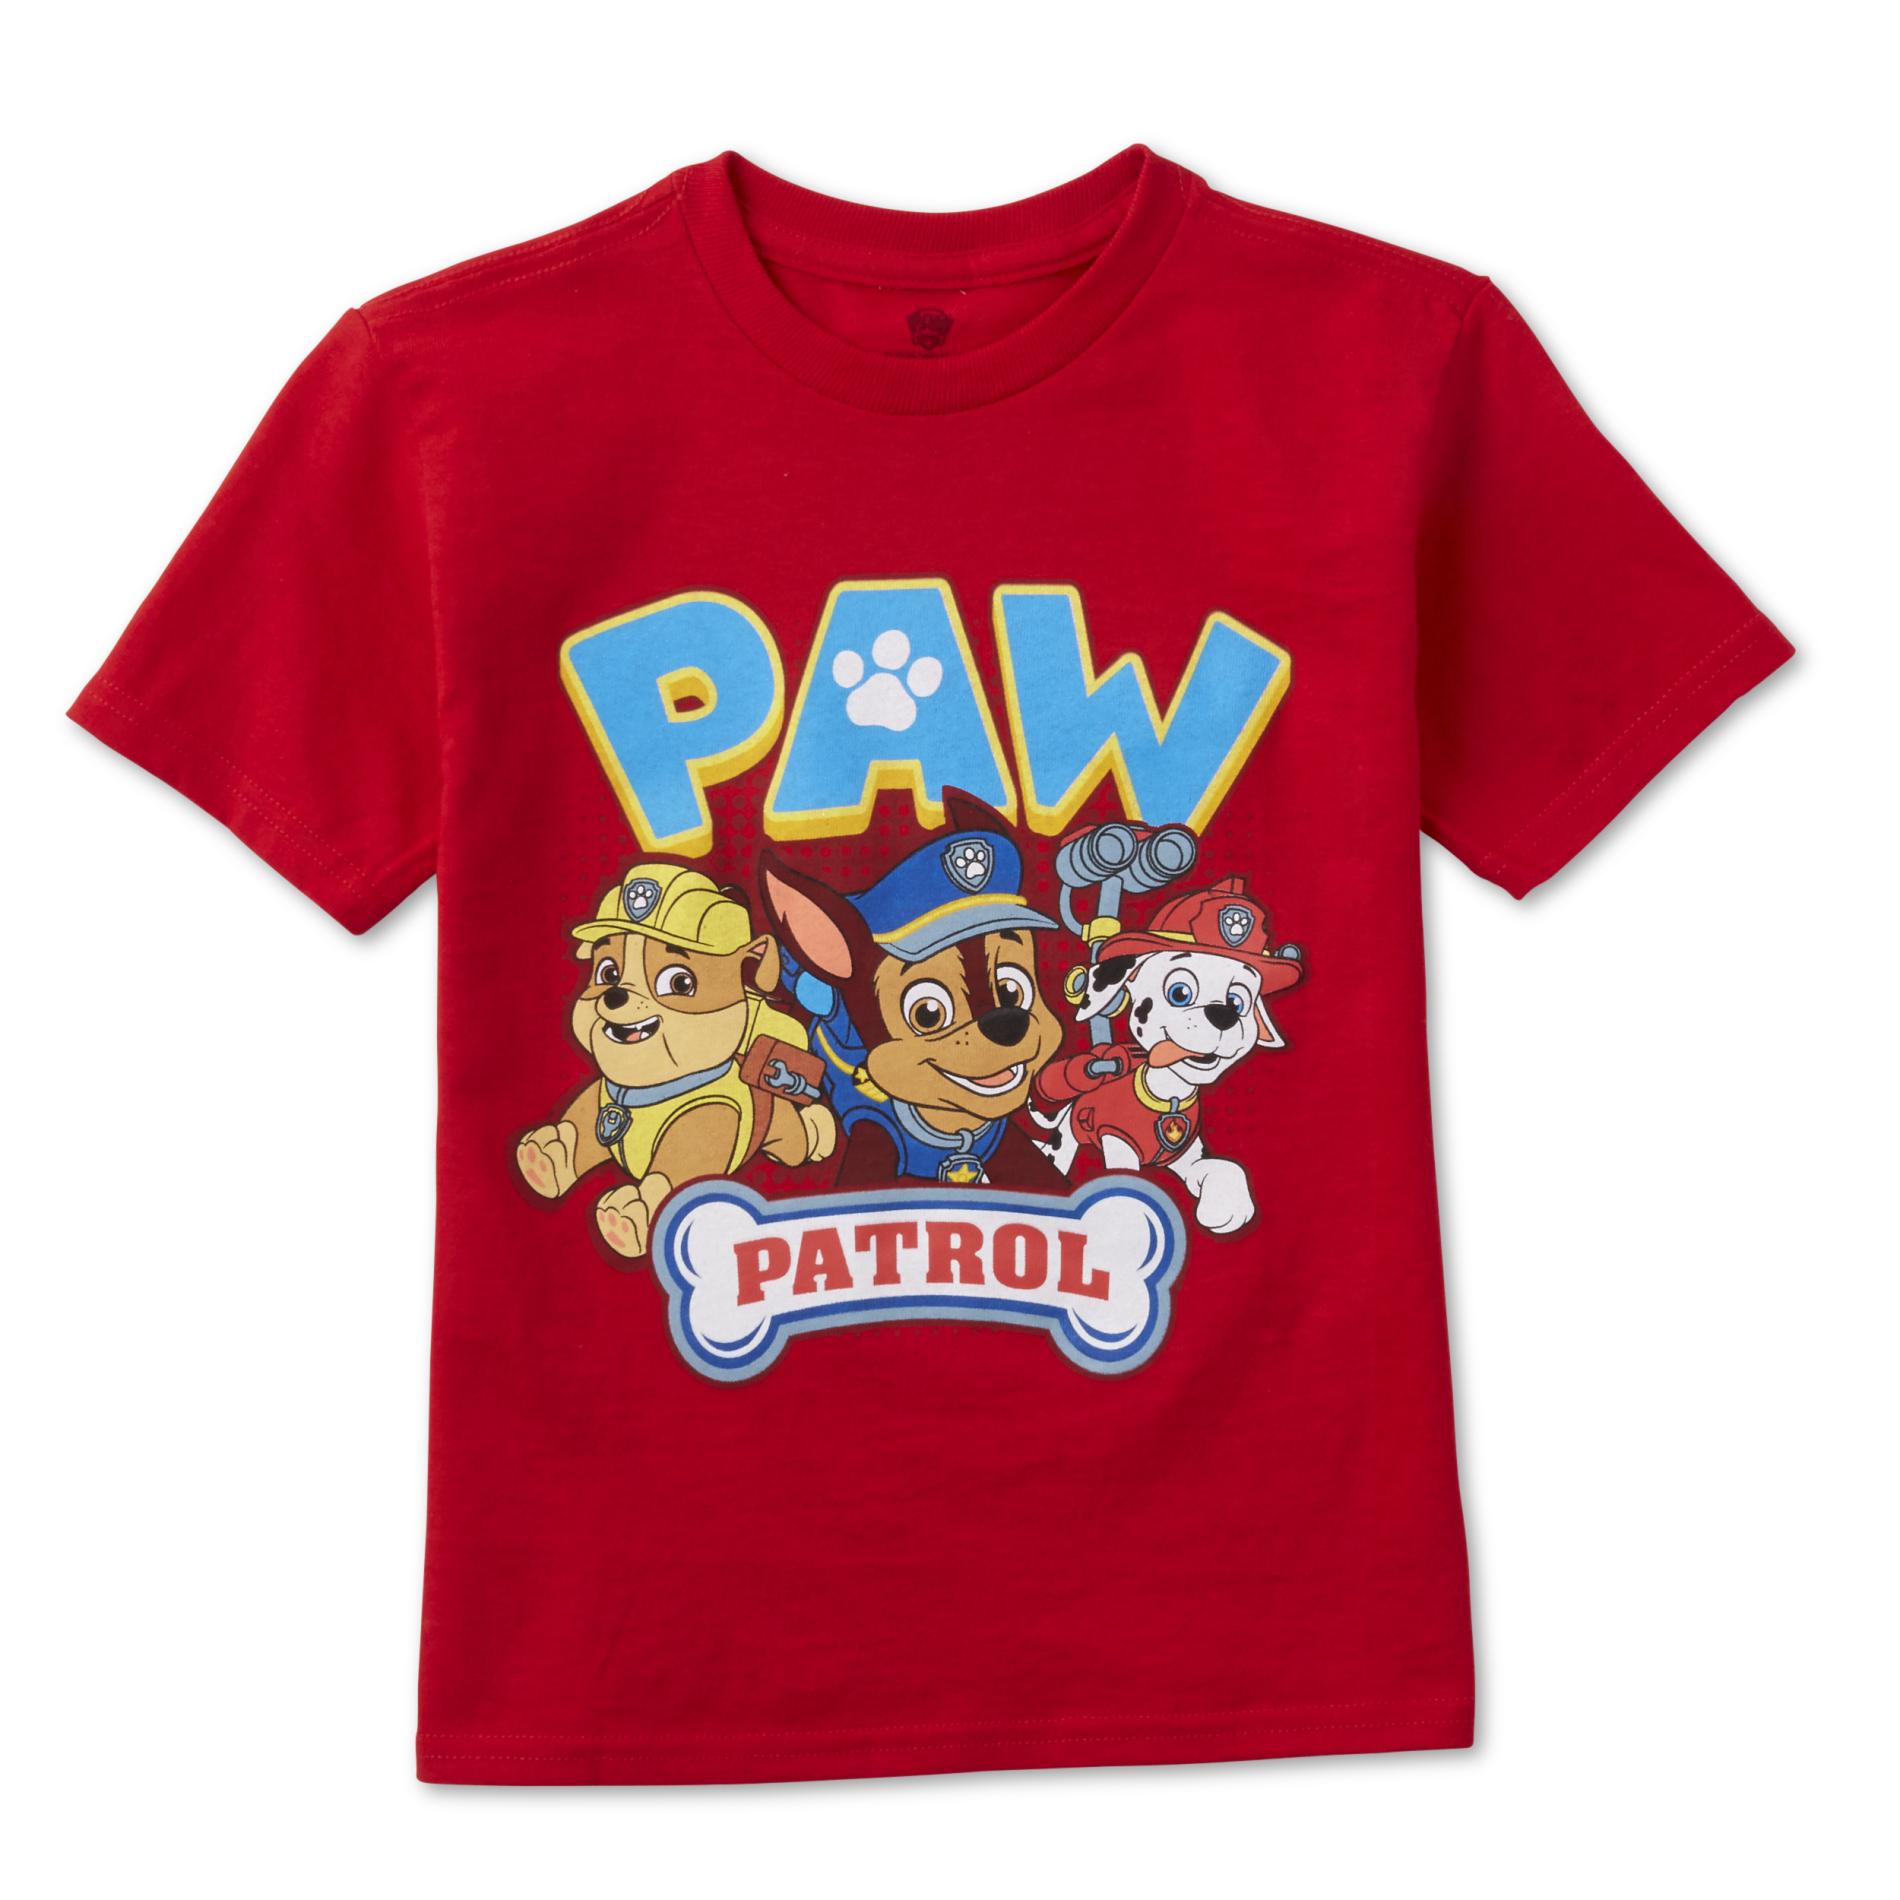 Nickelodeon PAW Patrol Boys' Graphic T-Shirt